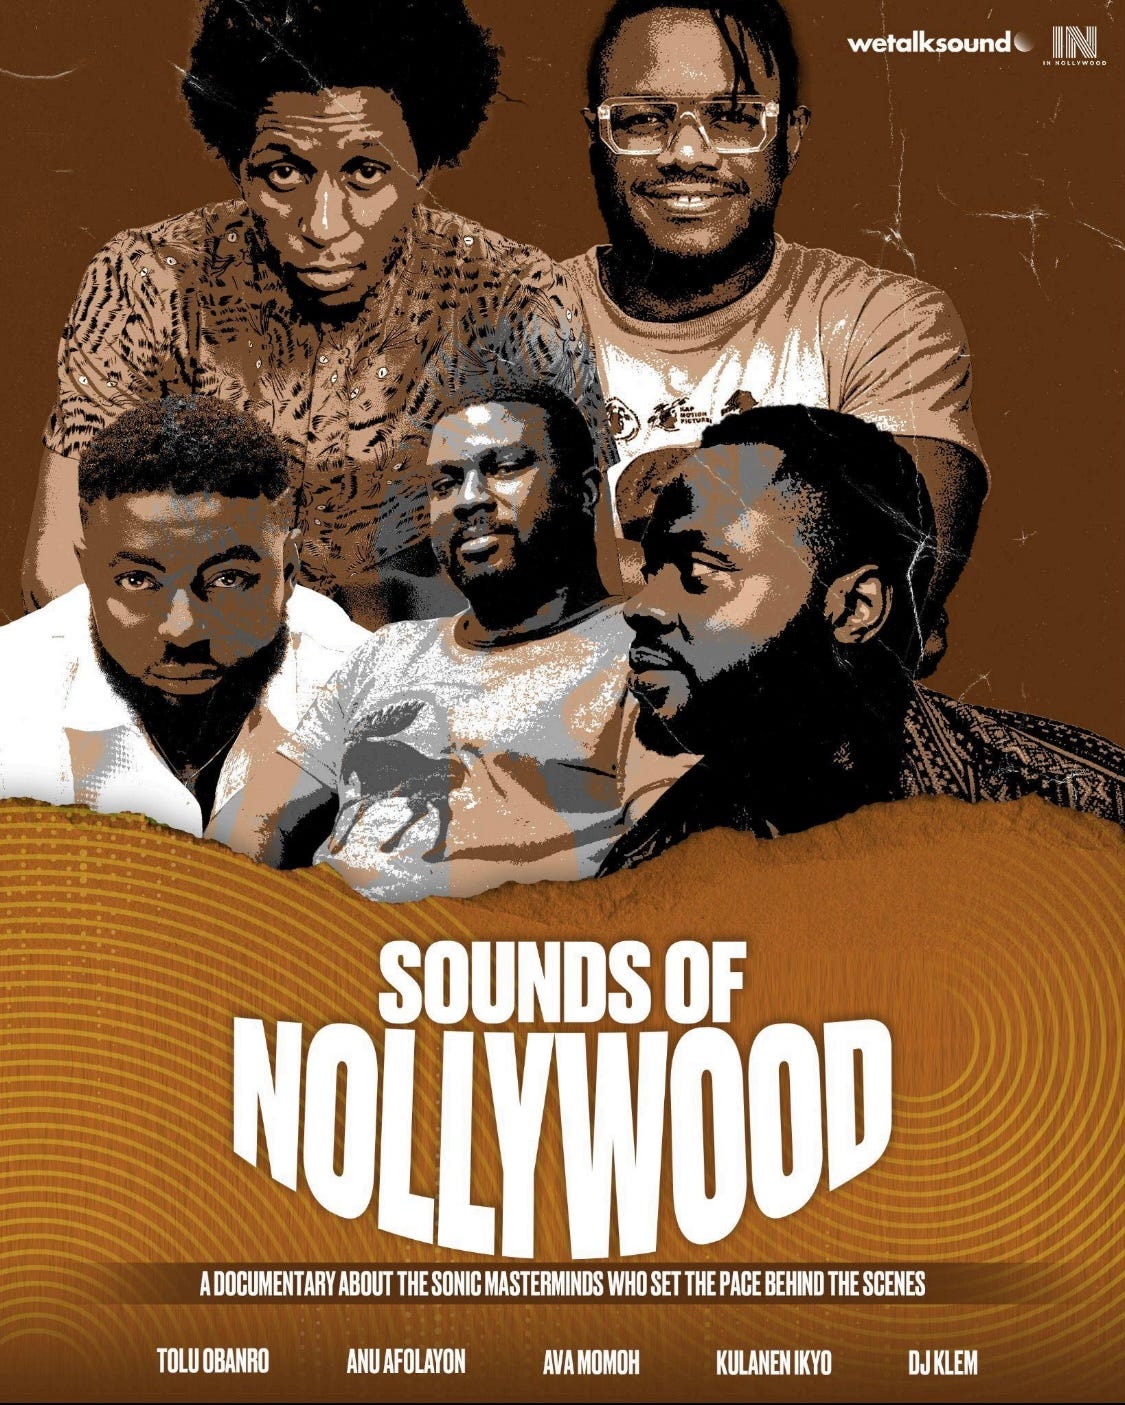 TvNolly - Watch this nollywood movie 2022 https://youtu.be/s2IuEwOEzBY  Enjoy! #nollywood #nigerianmovies | Facebook